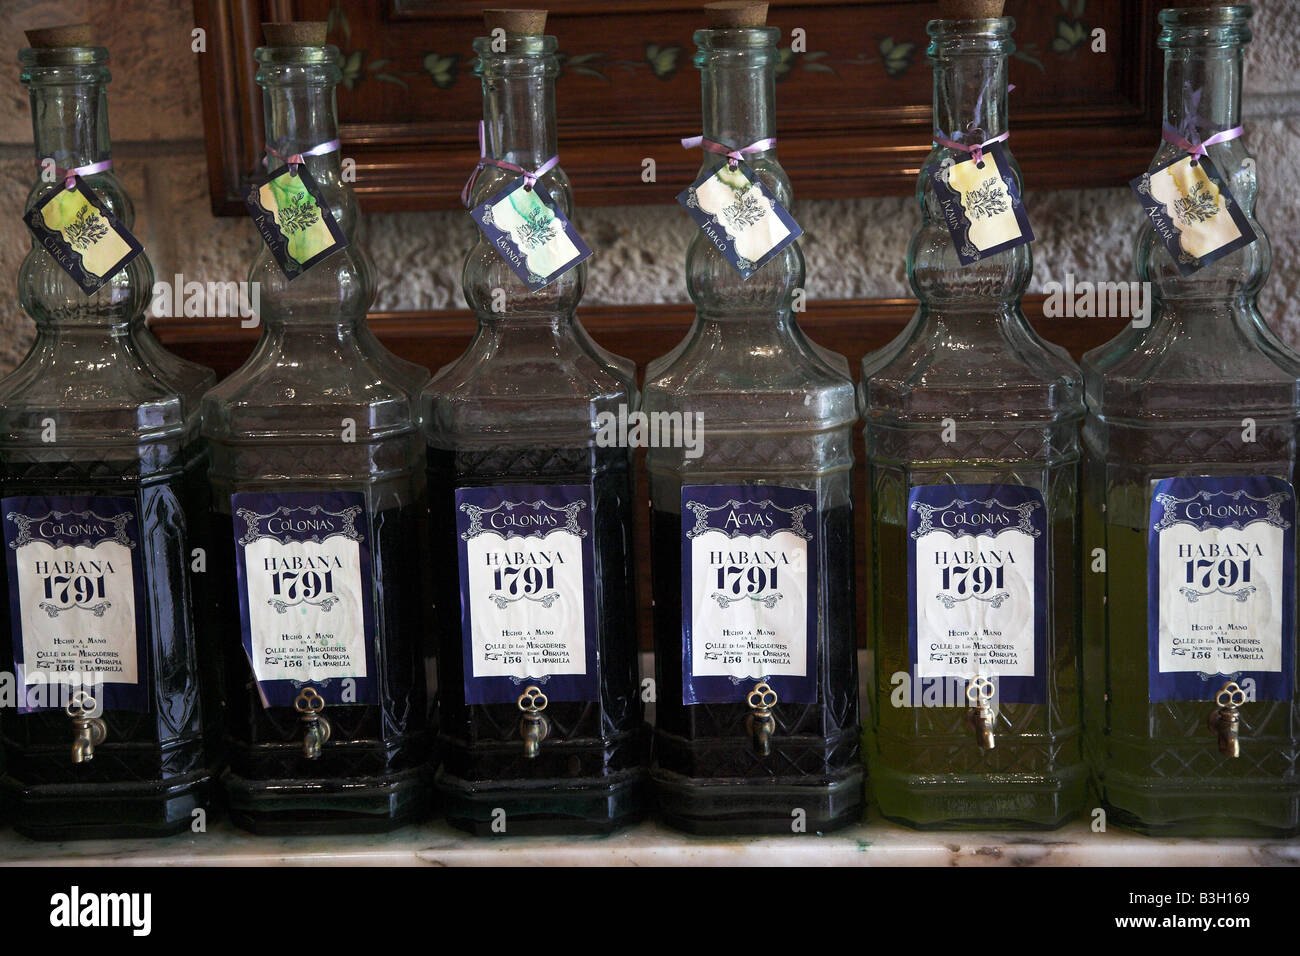 Hand made perfumes on display in Havana's oldest perfume shop, Havana 1791, in Cuba. Stock Photo